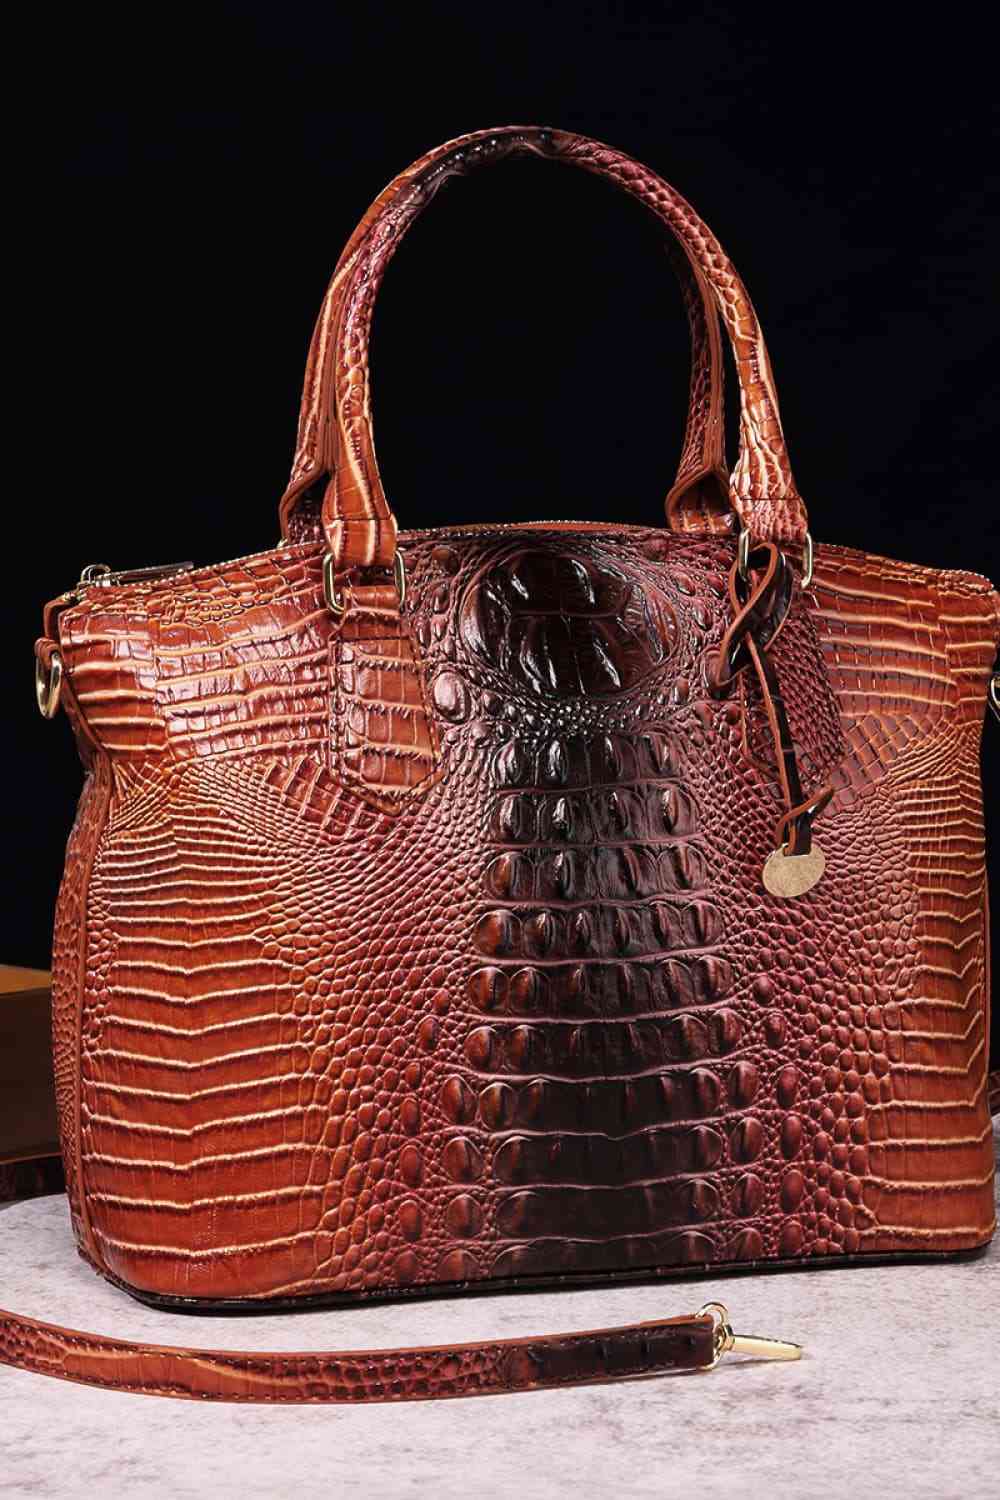 Gradient PU Leather Handbag - Just Enuff Sexy